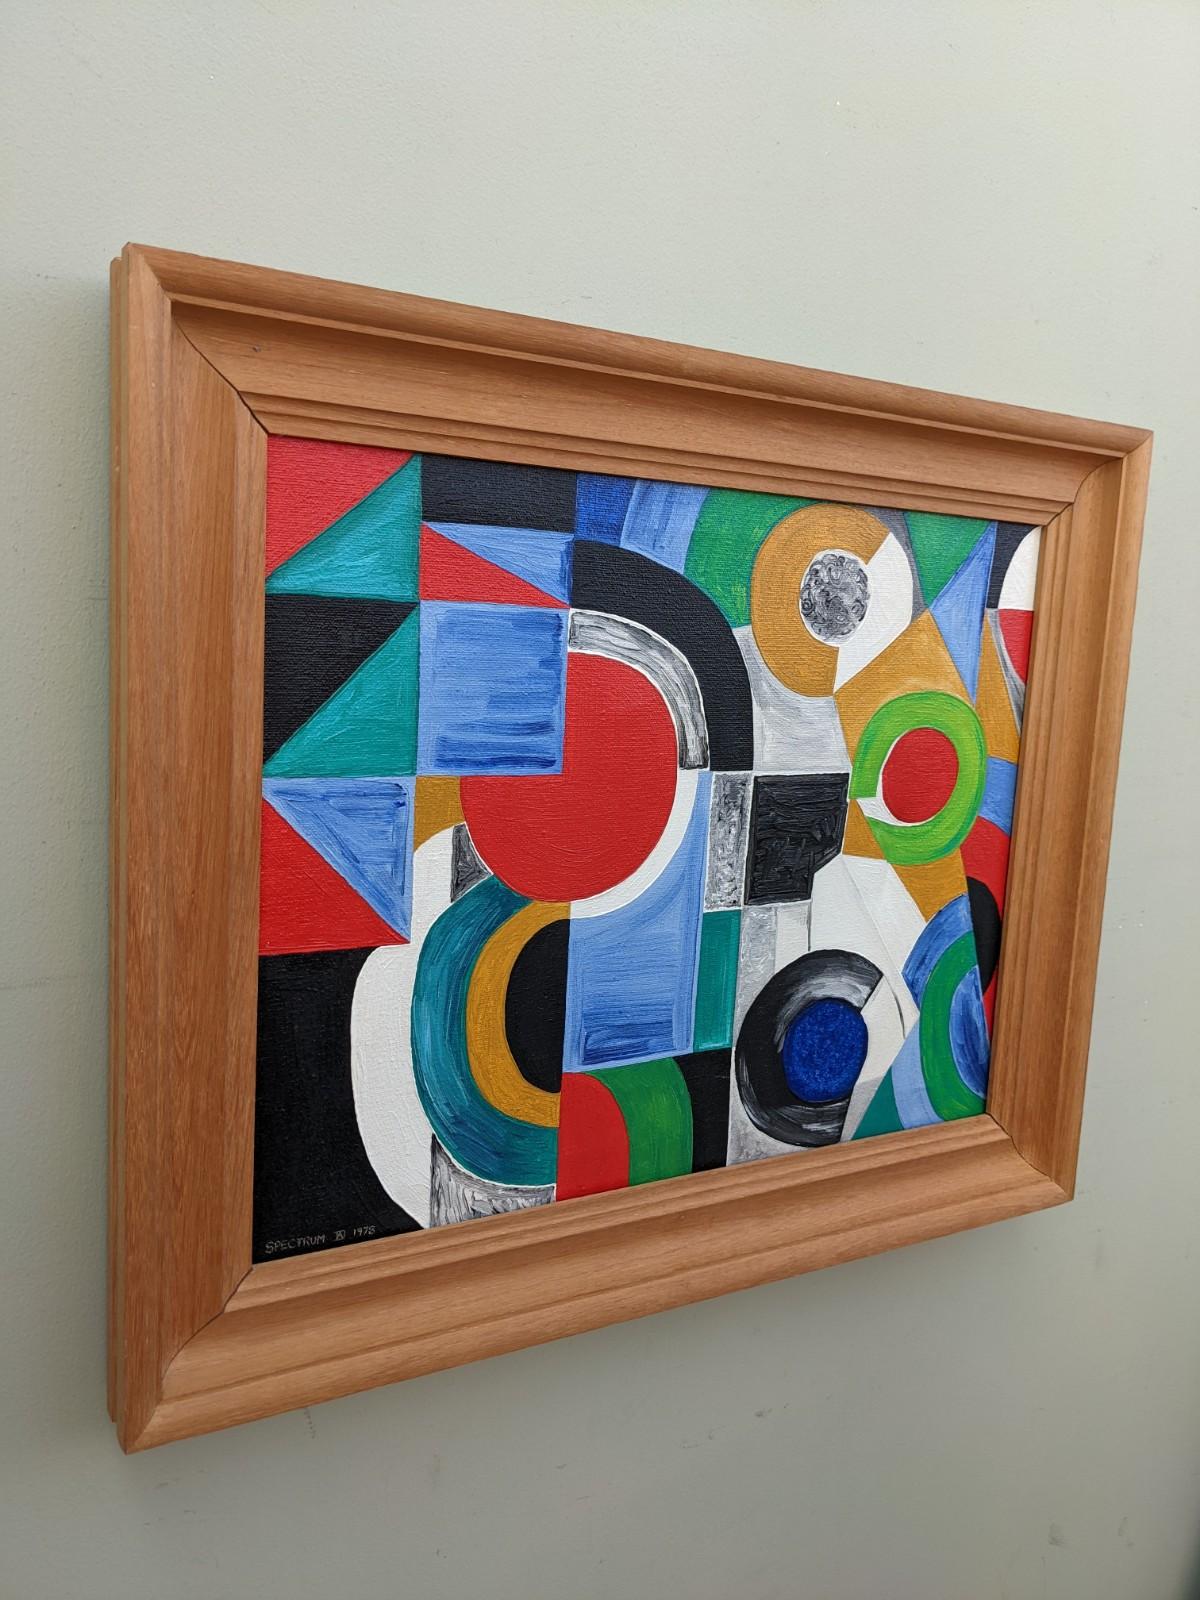 1978 Vintage Modernist Abstract Geometric Framed Oil Painting - Spectrum 1